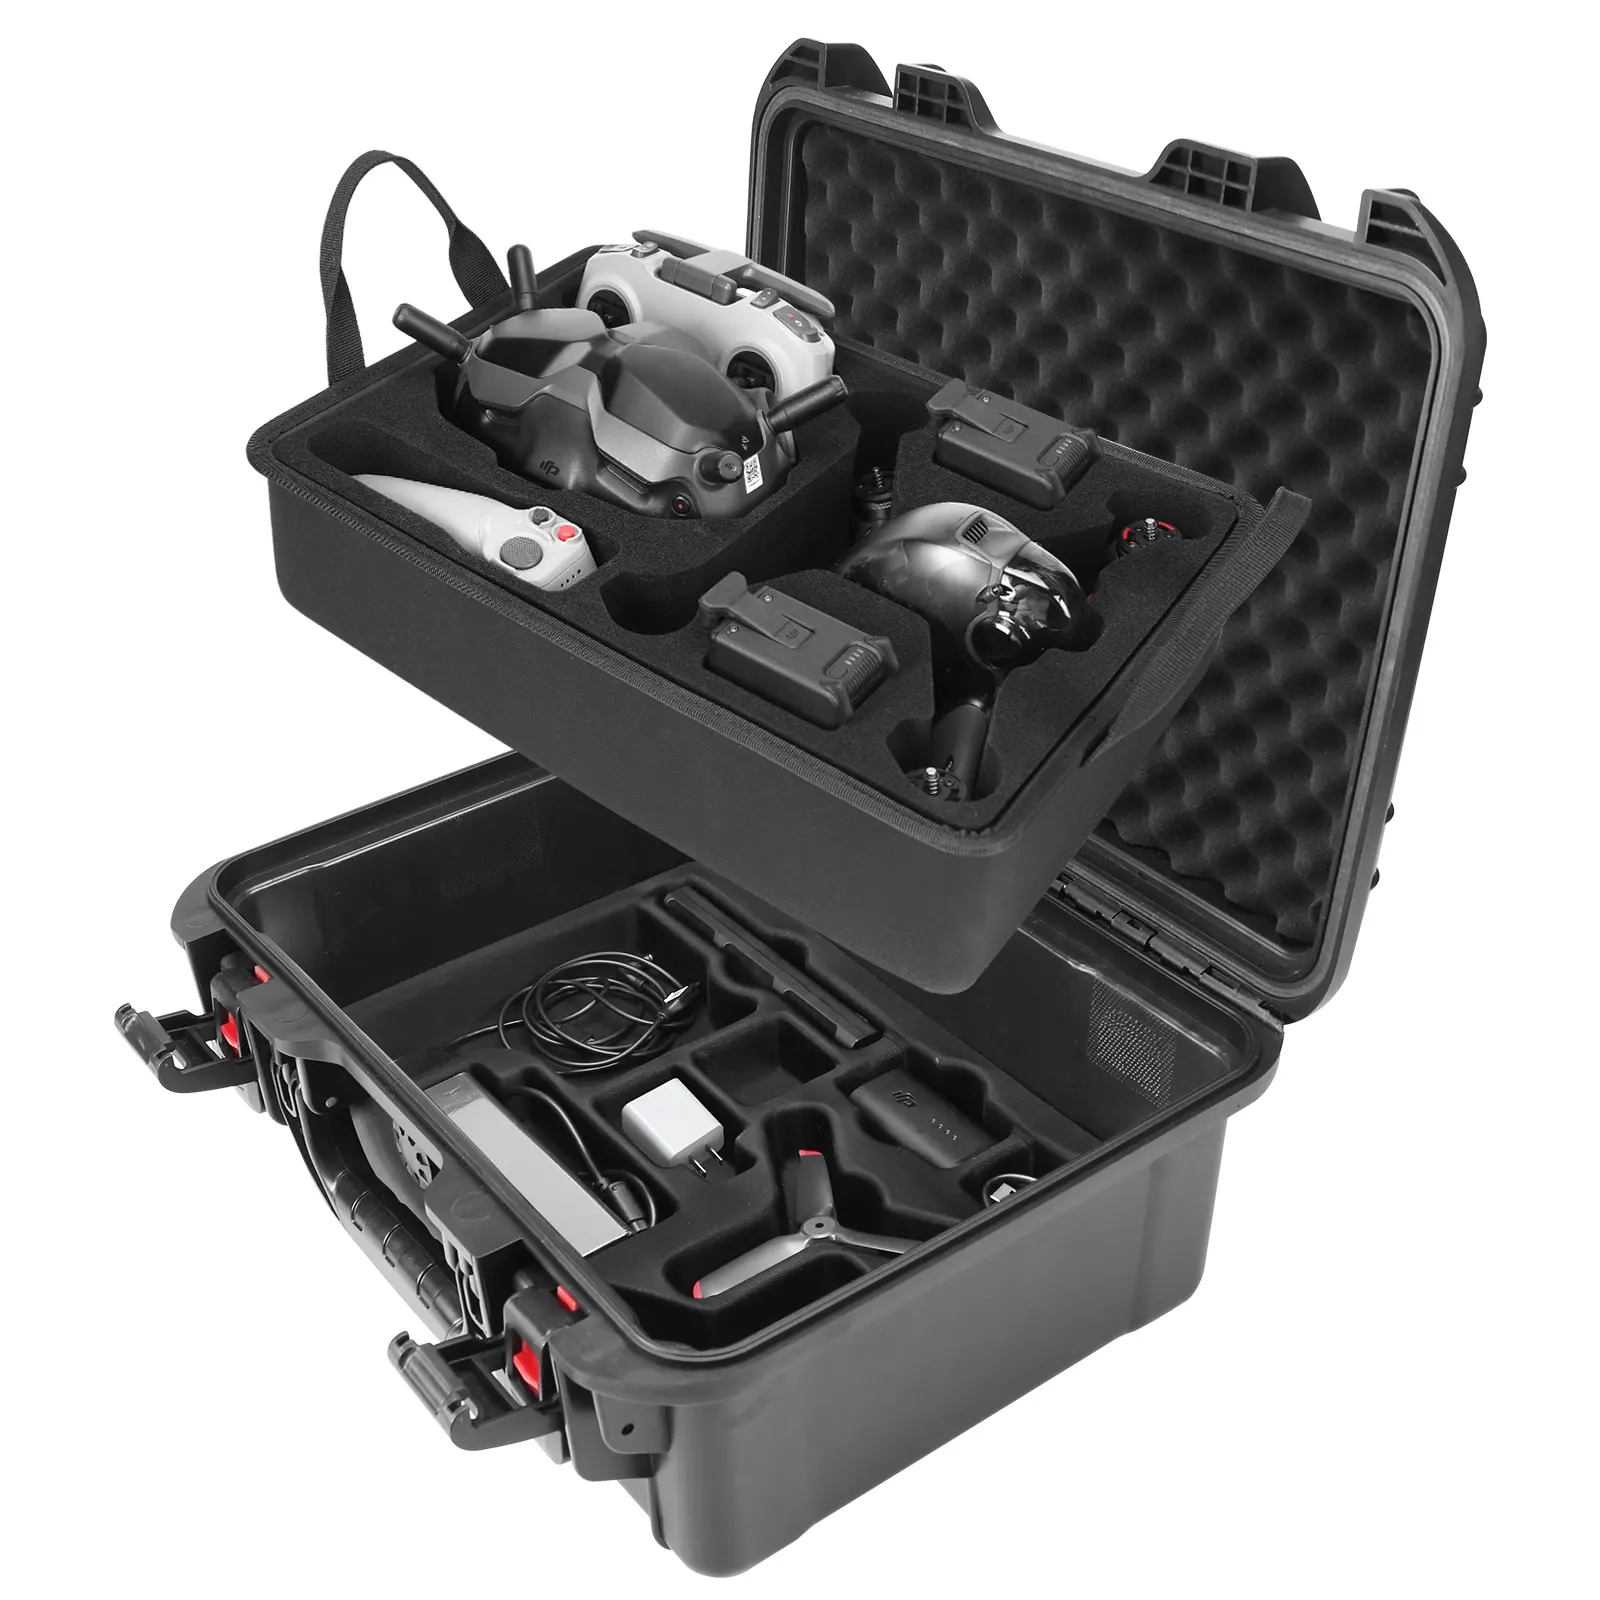 Sma tree Drone Accessories Black Storage Bag for DJI FPV Waterproof Case